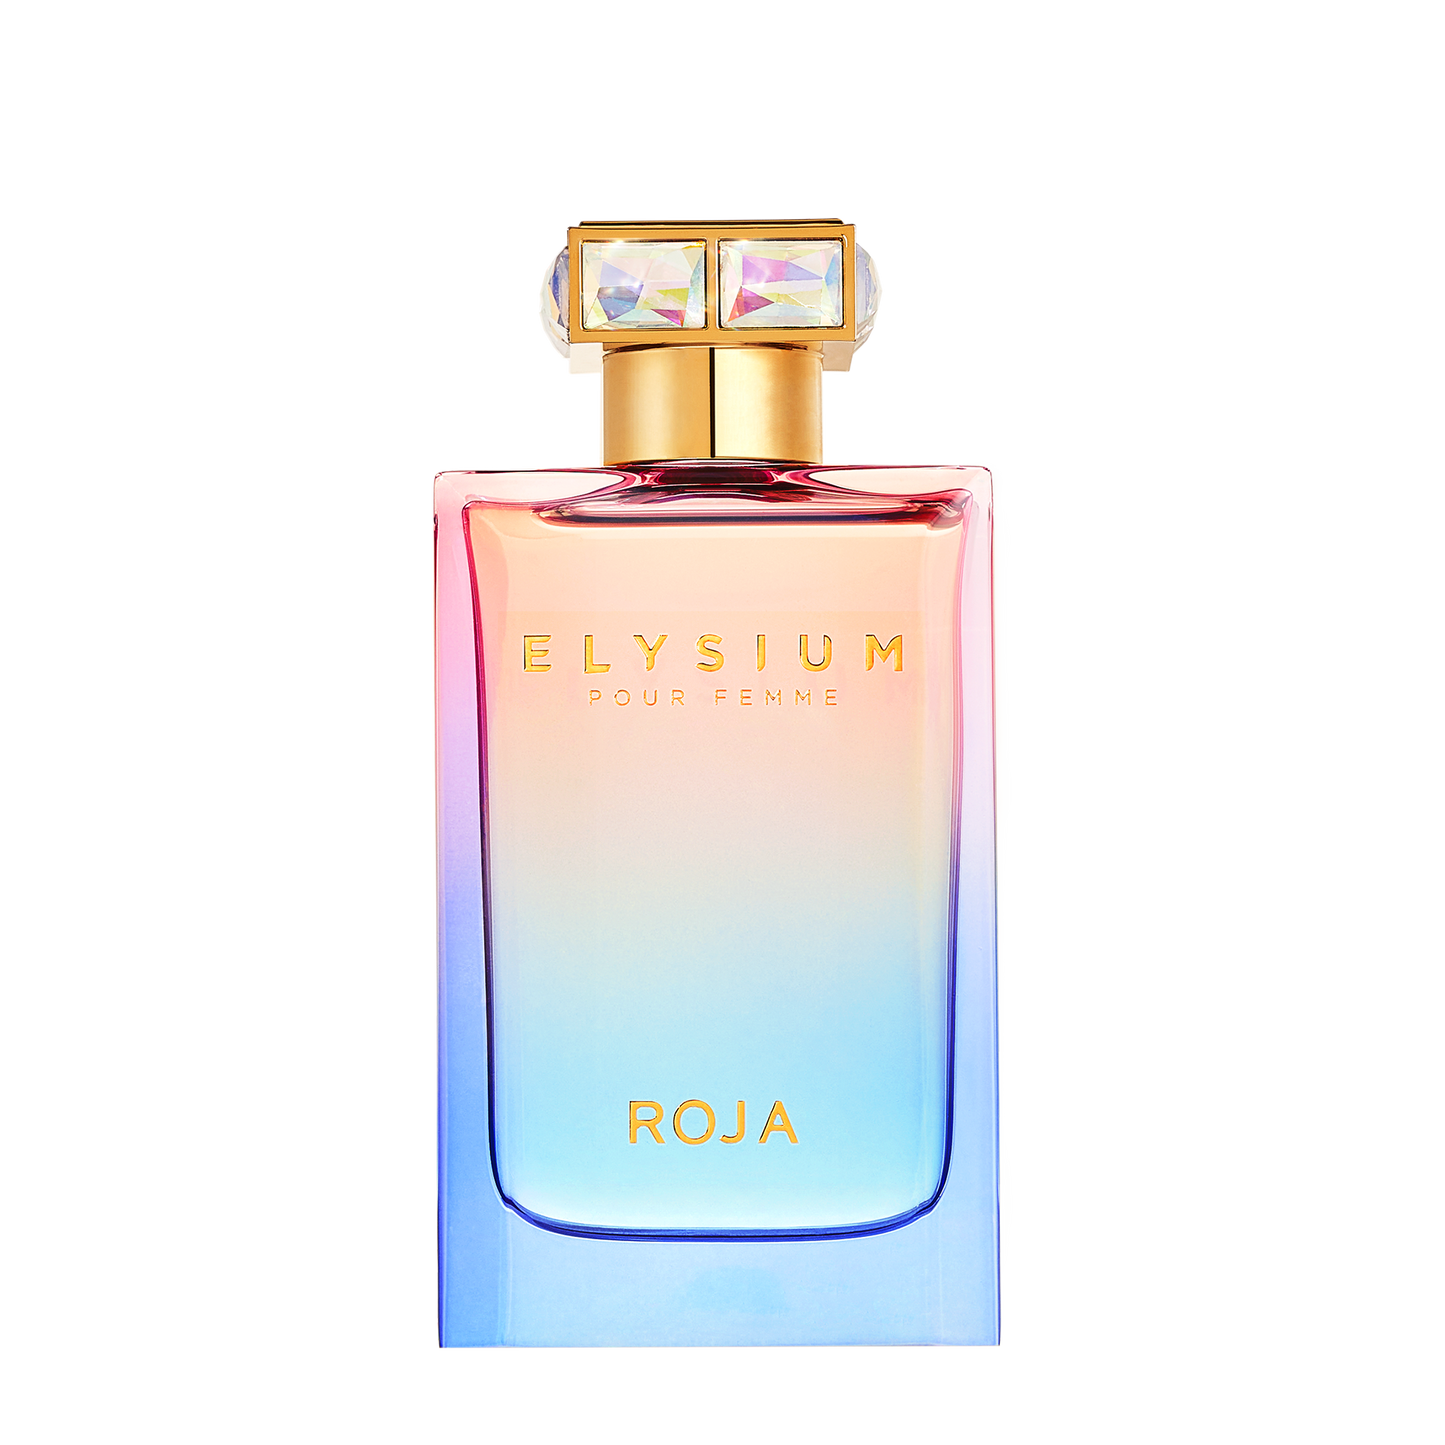 Elysium Pour Femme Roja Parfums EDP Sample 2ml